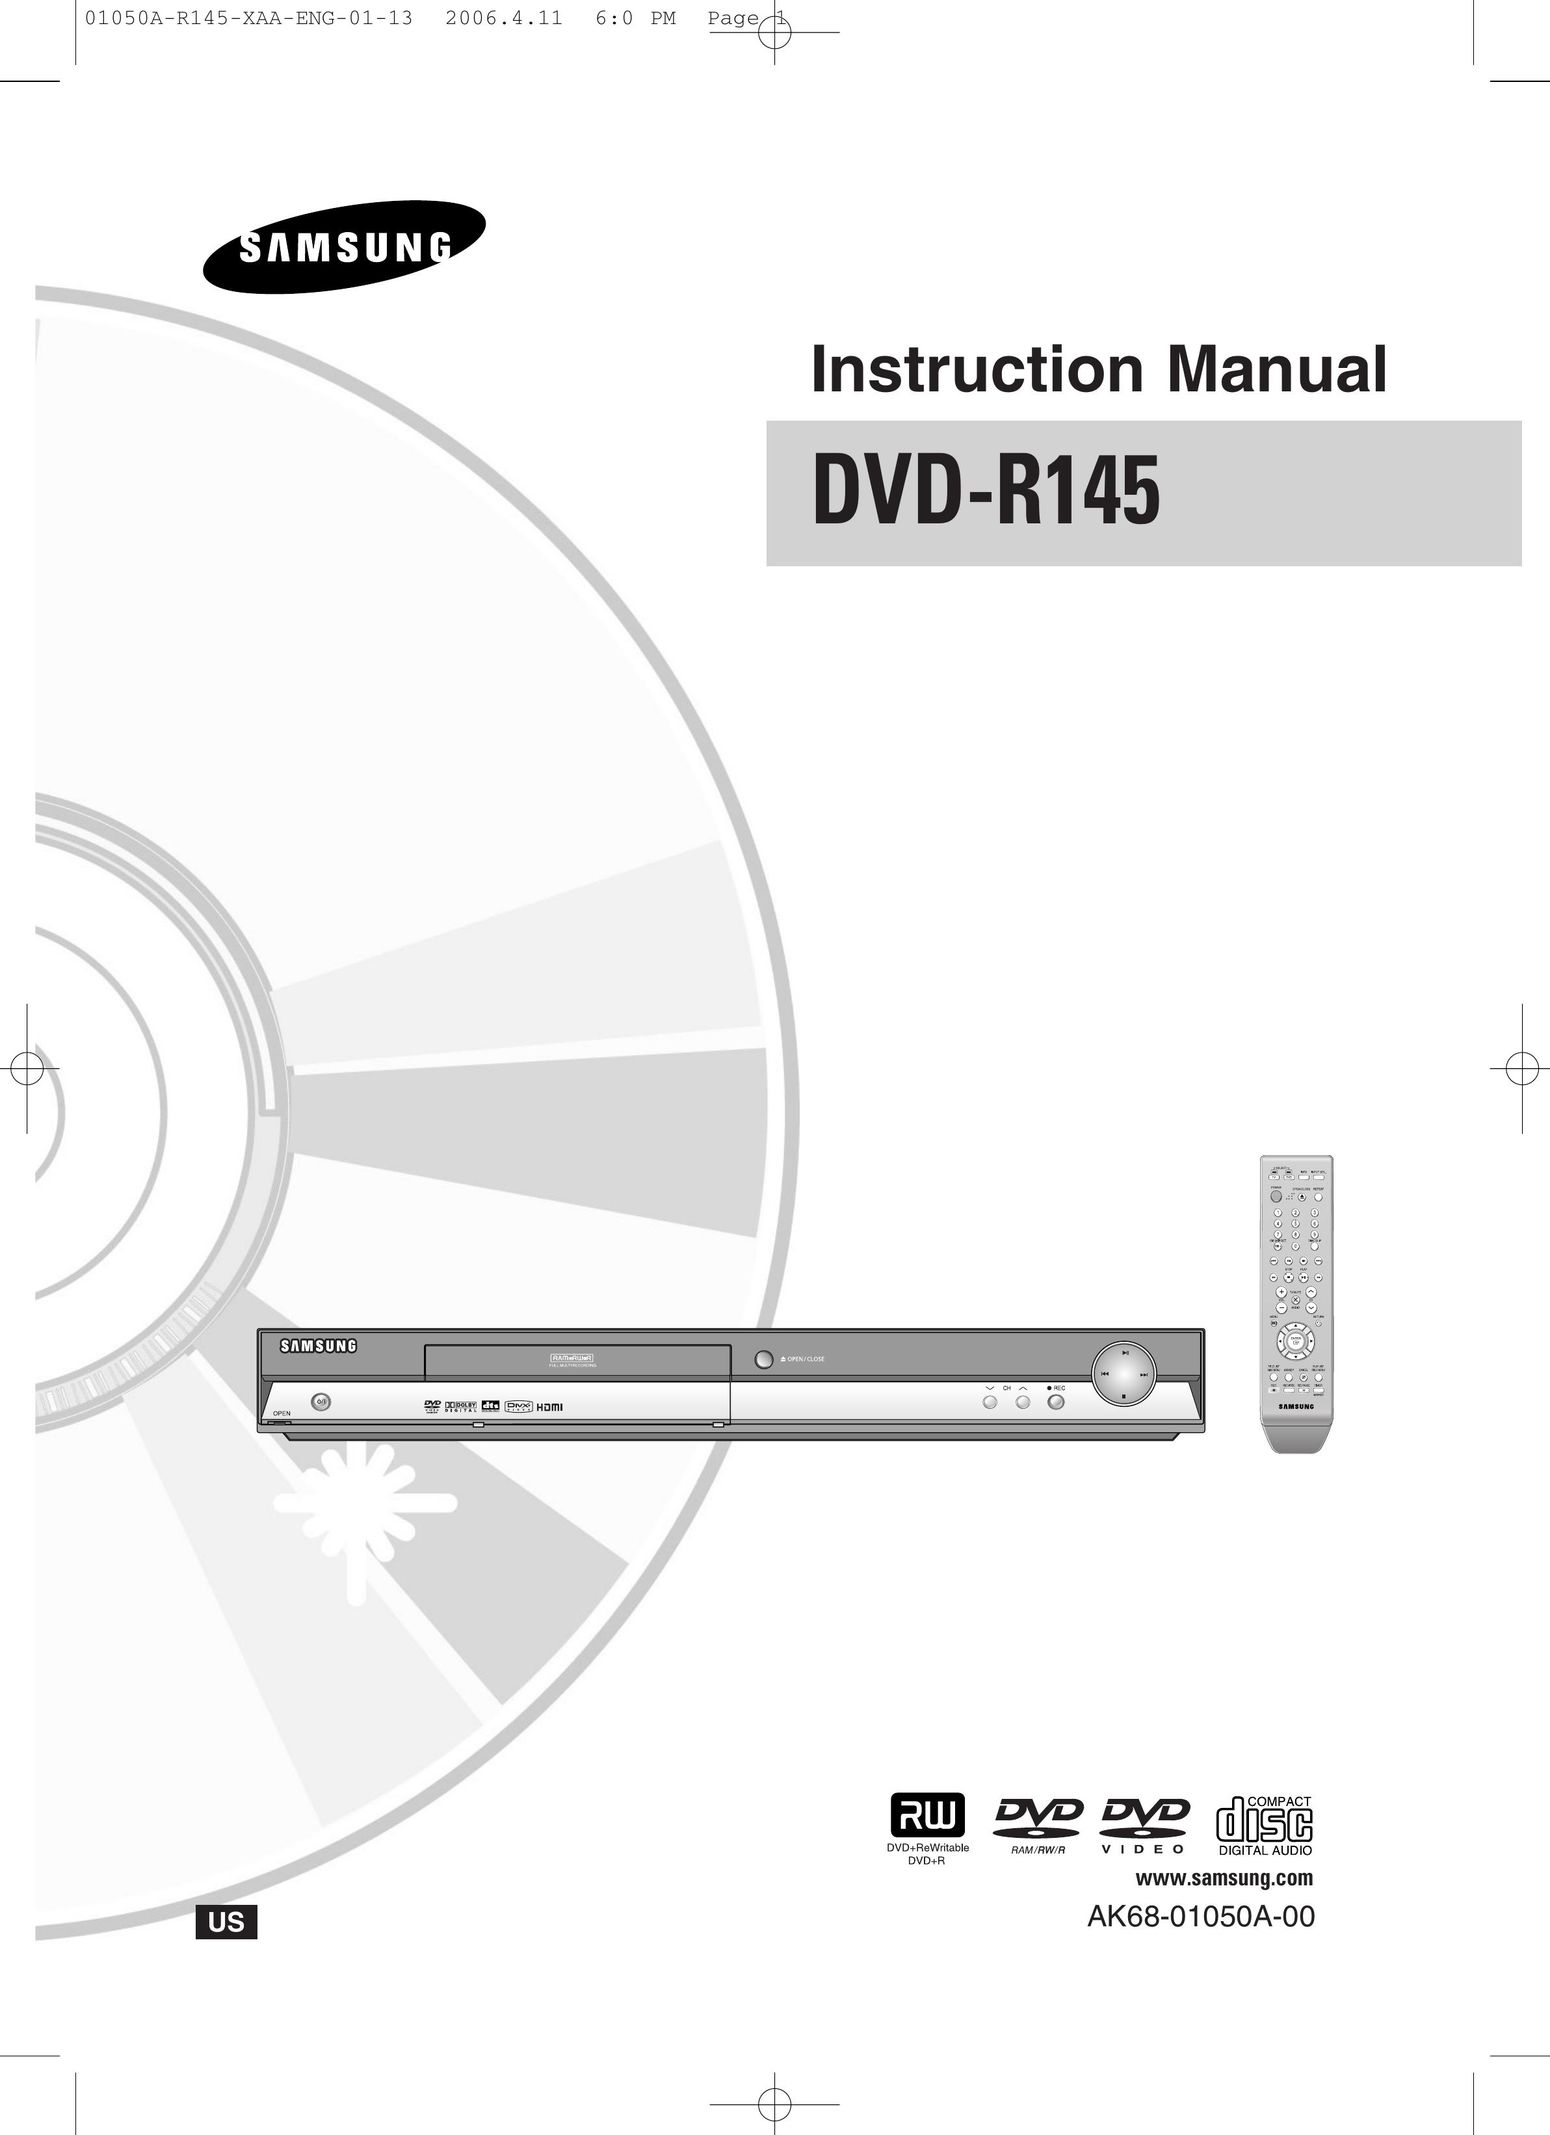 Samsung DVD-R145 DVD Recorder User Manual